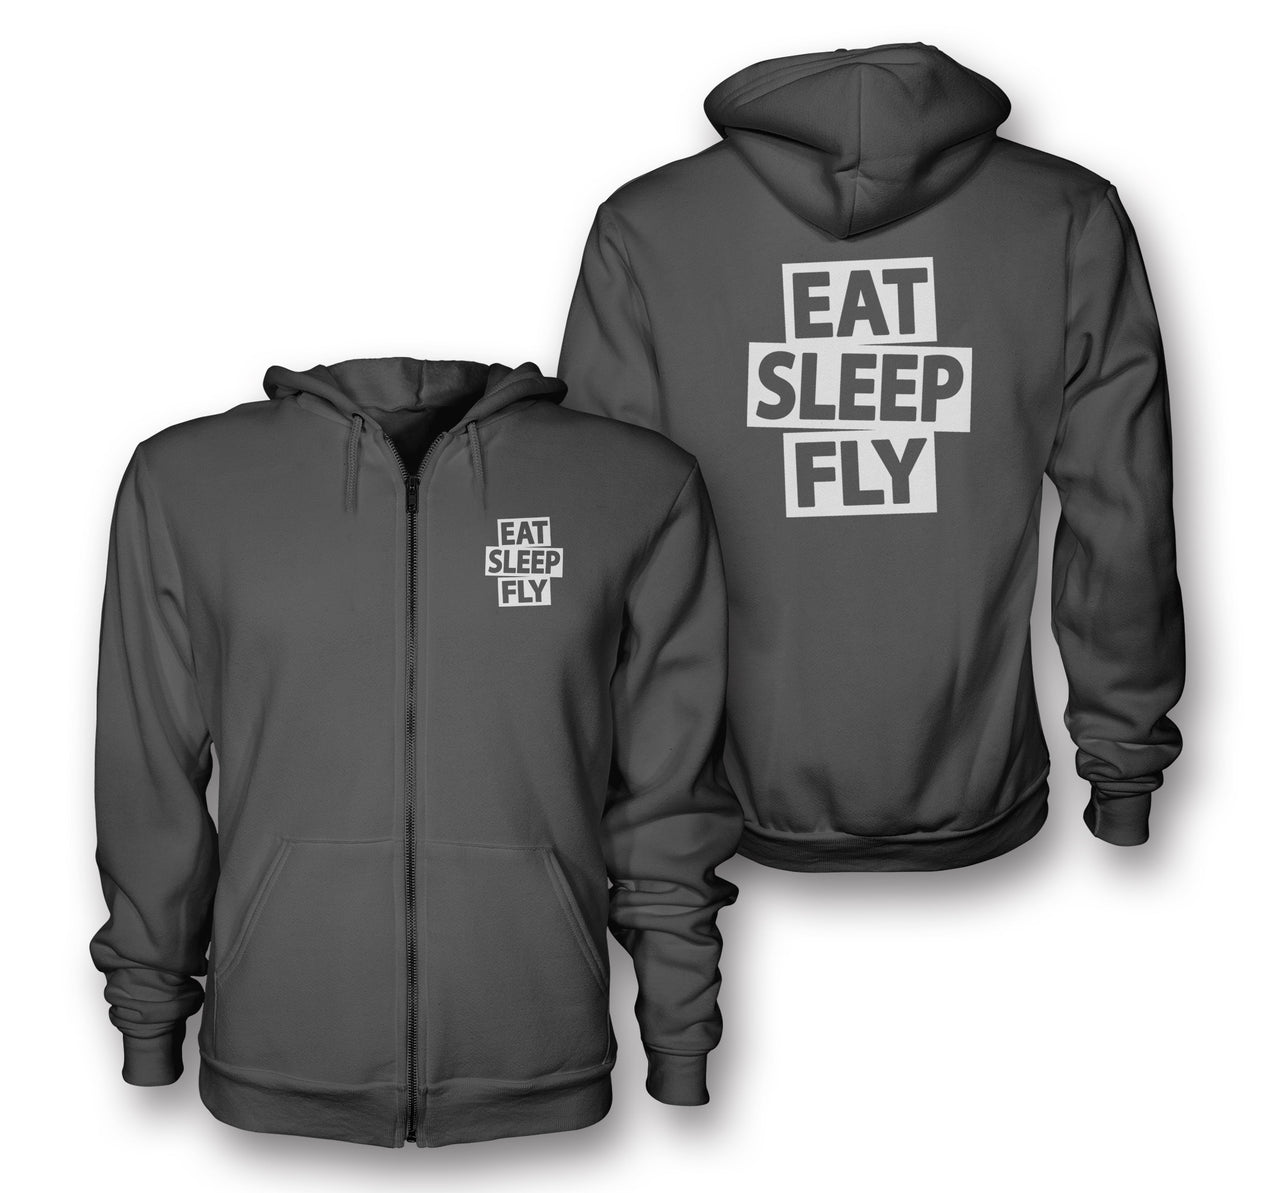 Eat Sleep Fly Designed Zipped Hoodies